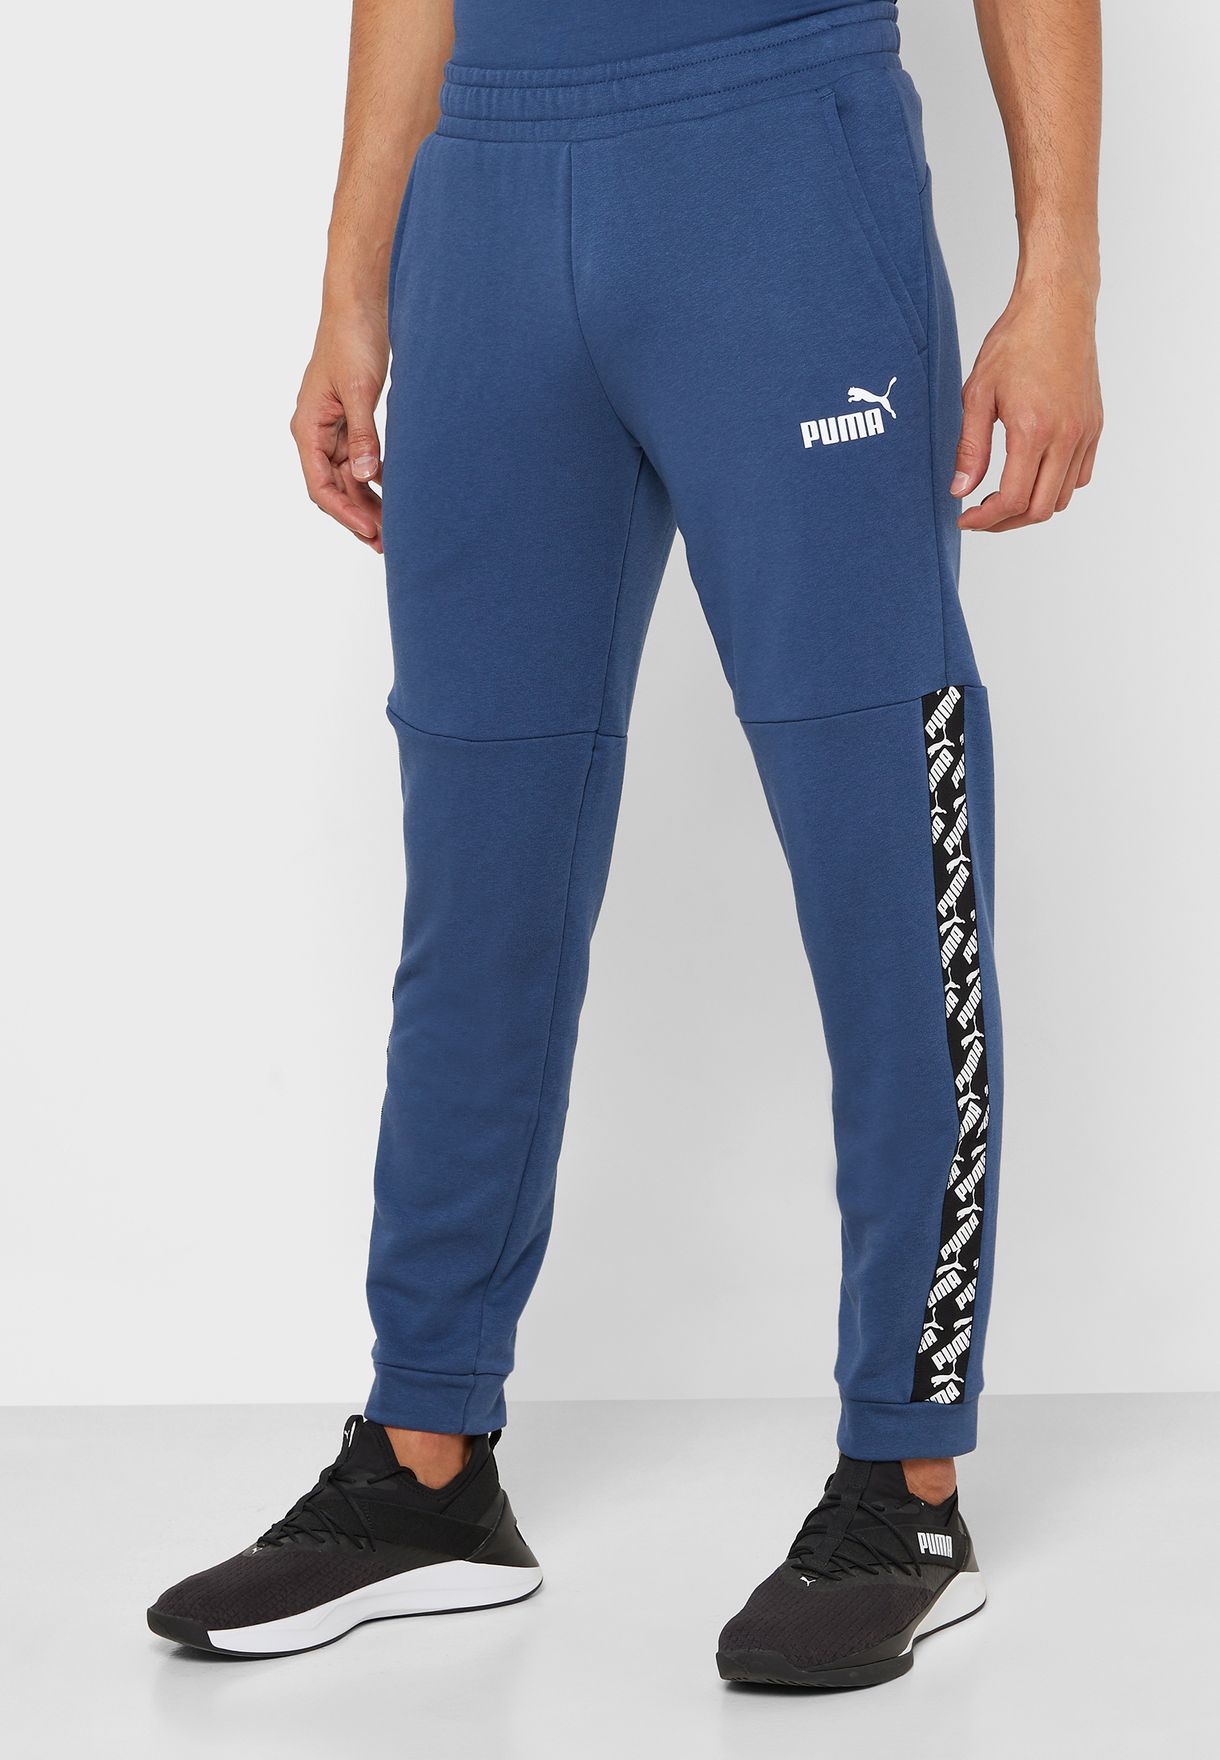 Buy > navy blue puma sweatpants > in stock